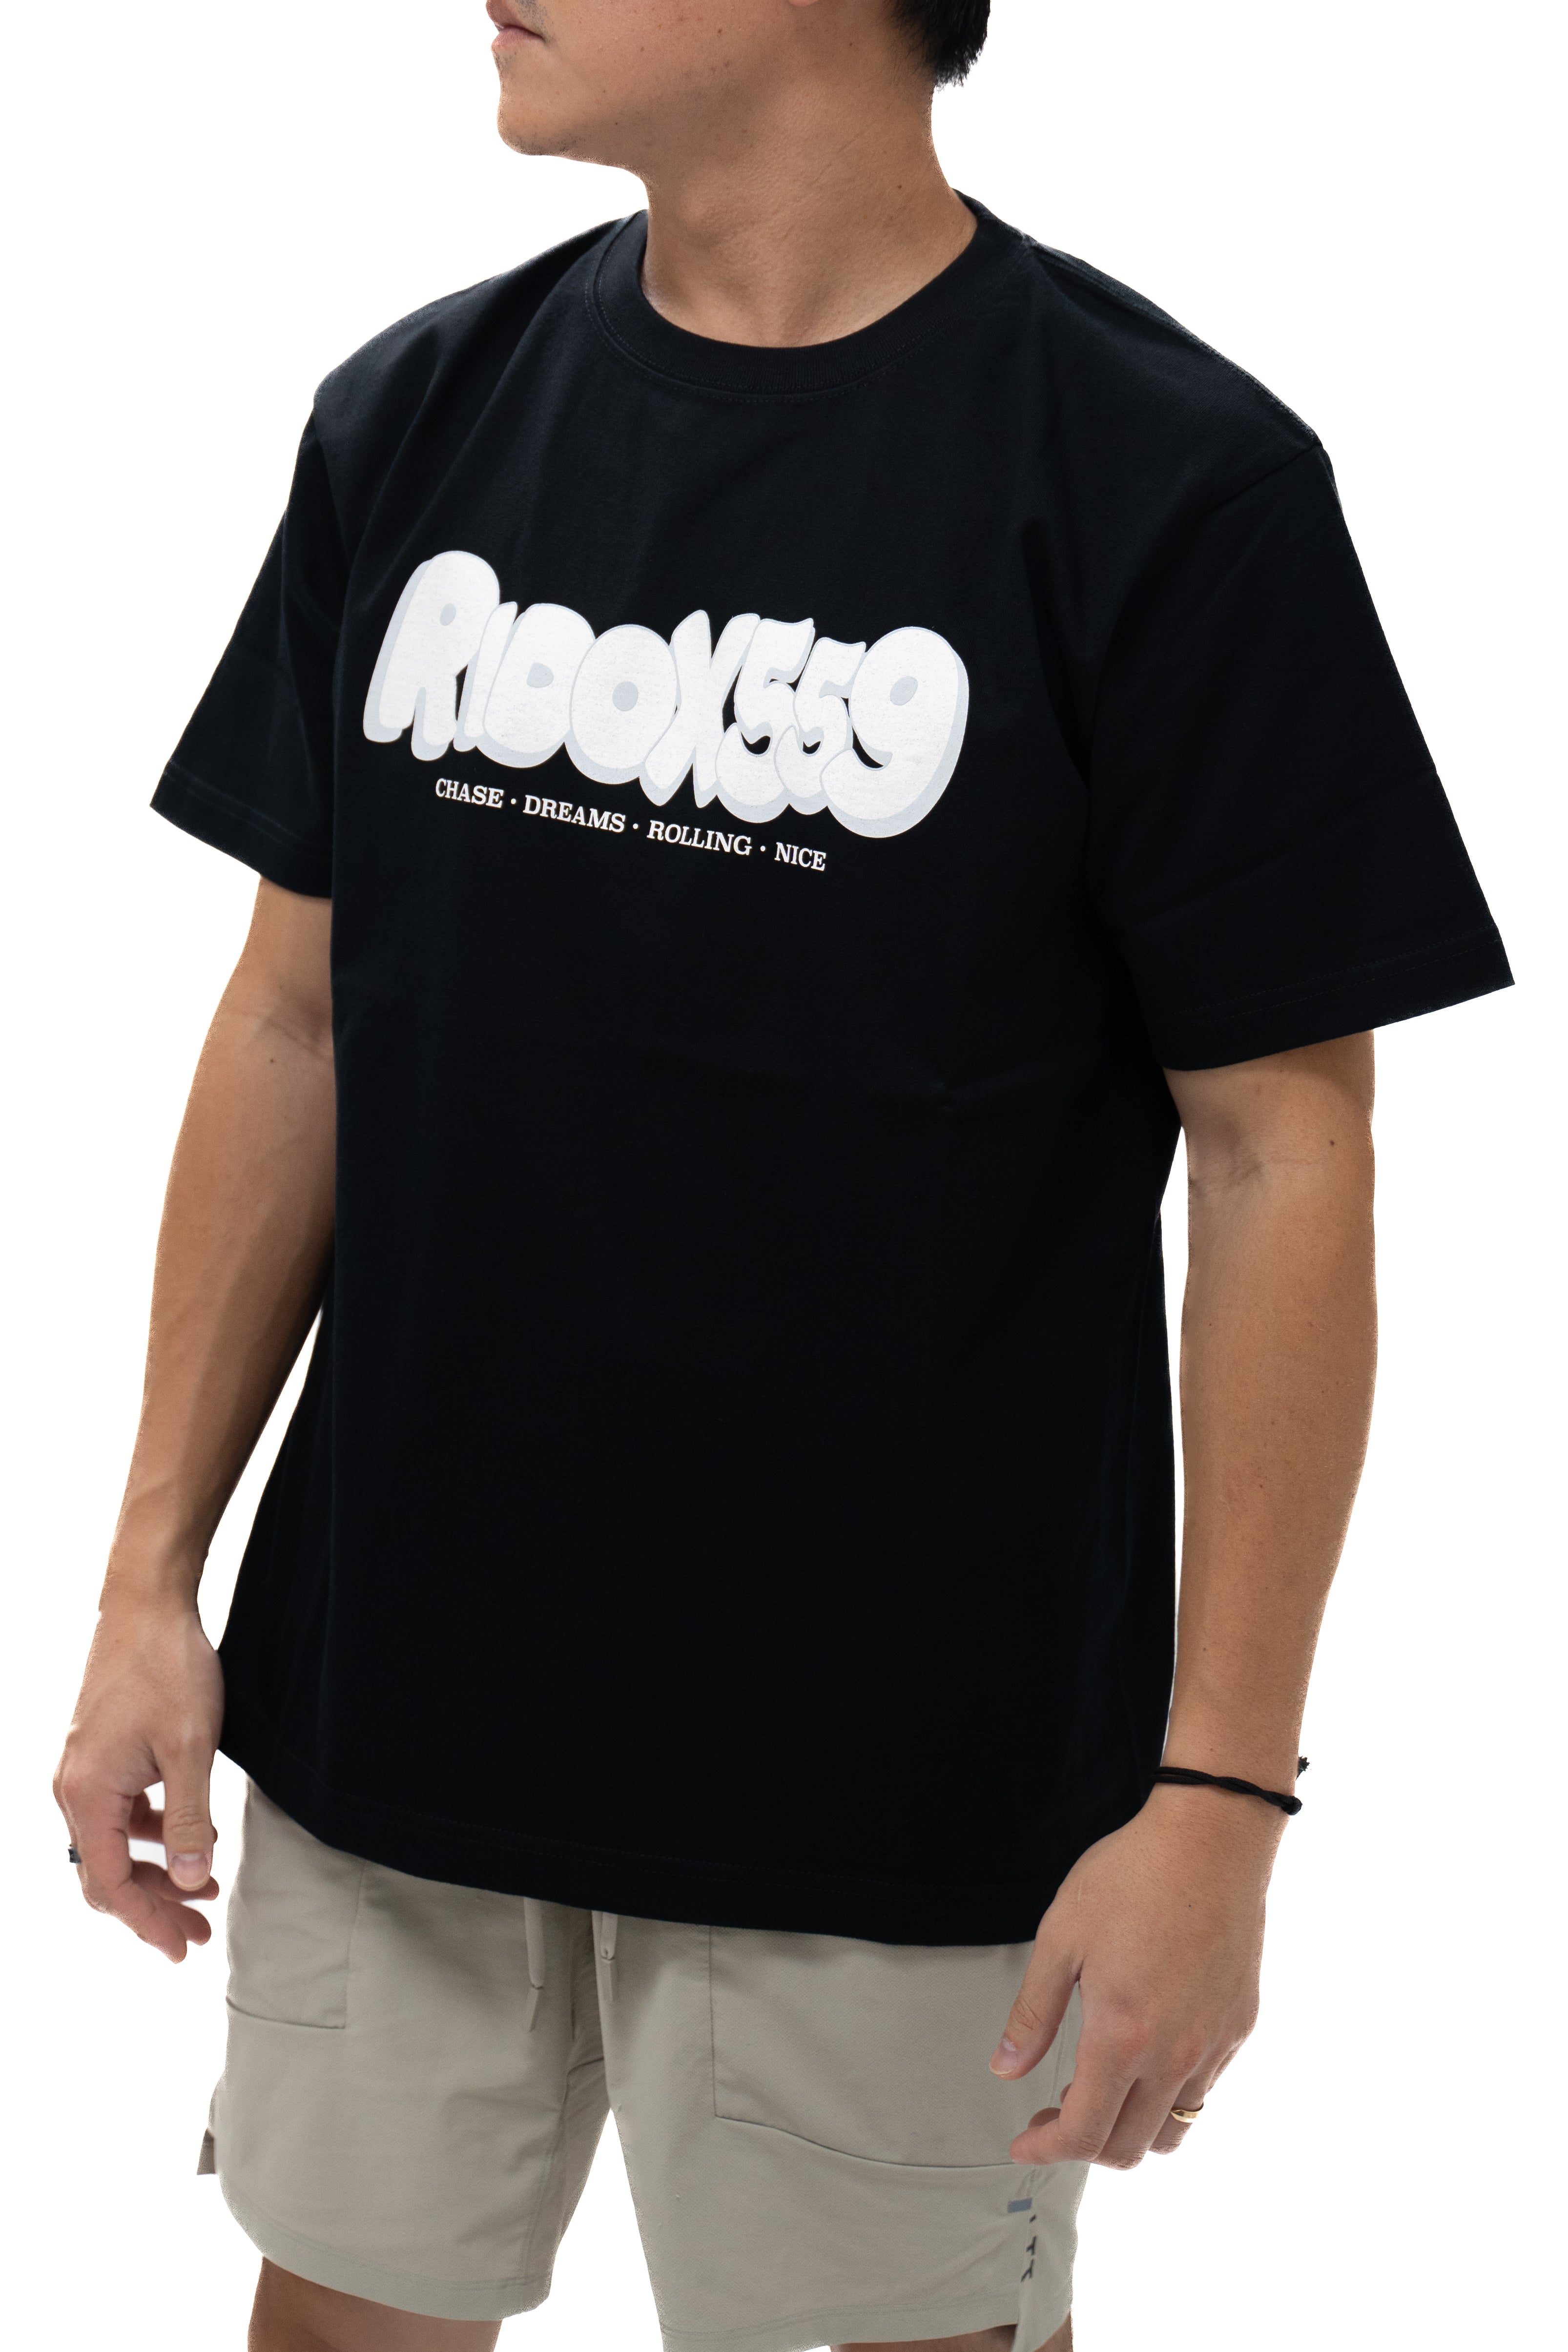 MAX ORIDO - RIDOX559 T-Shirt